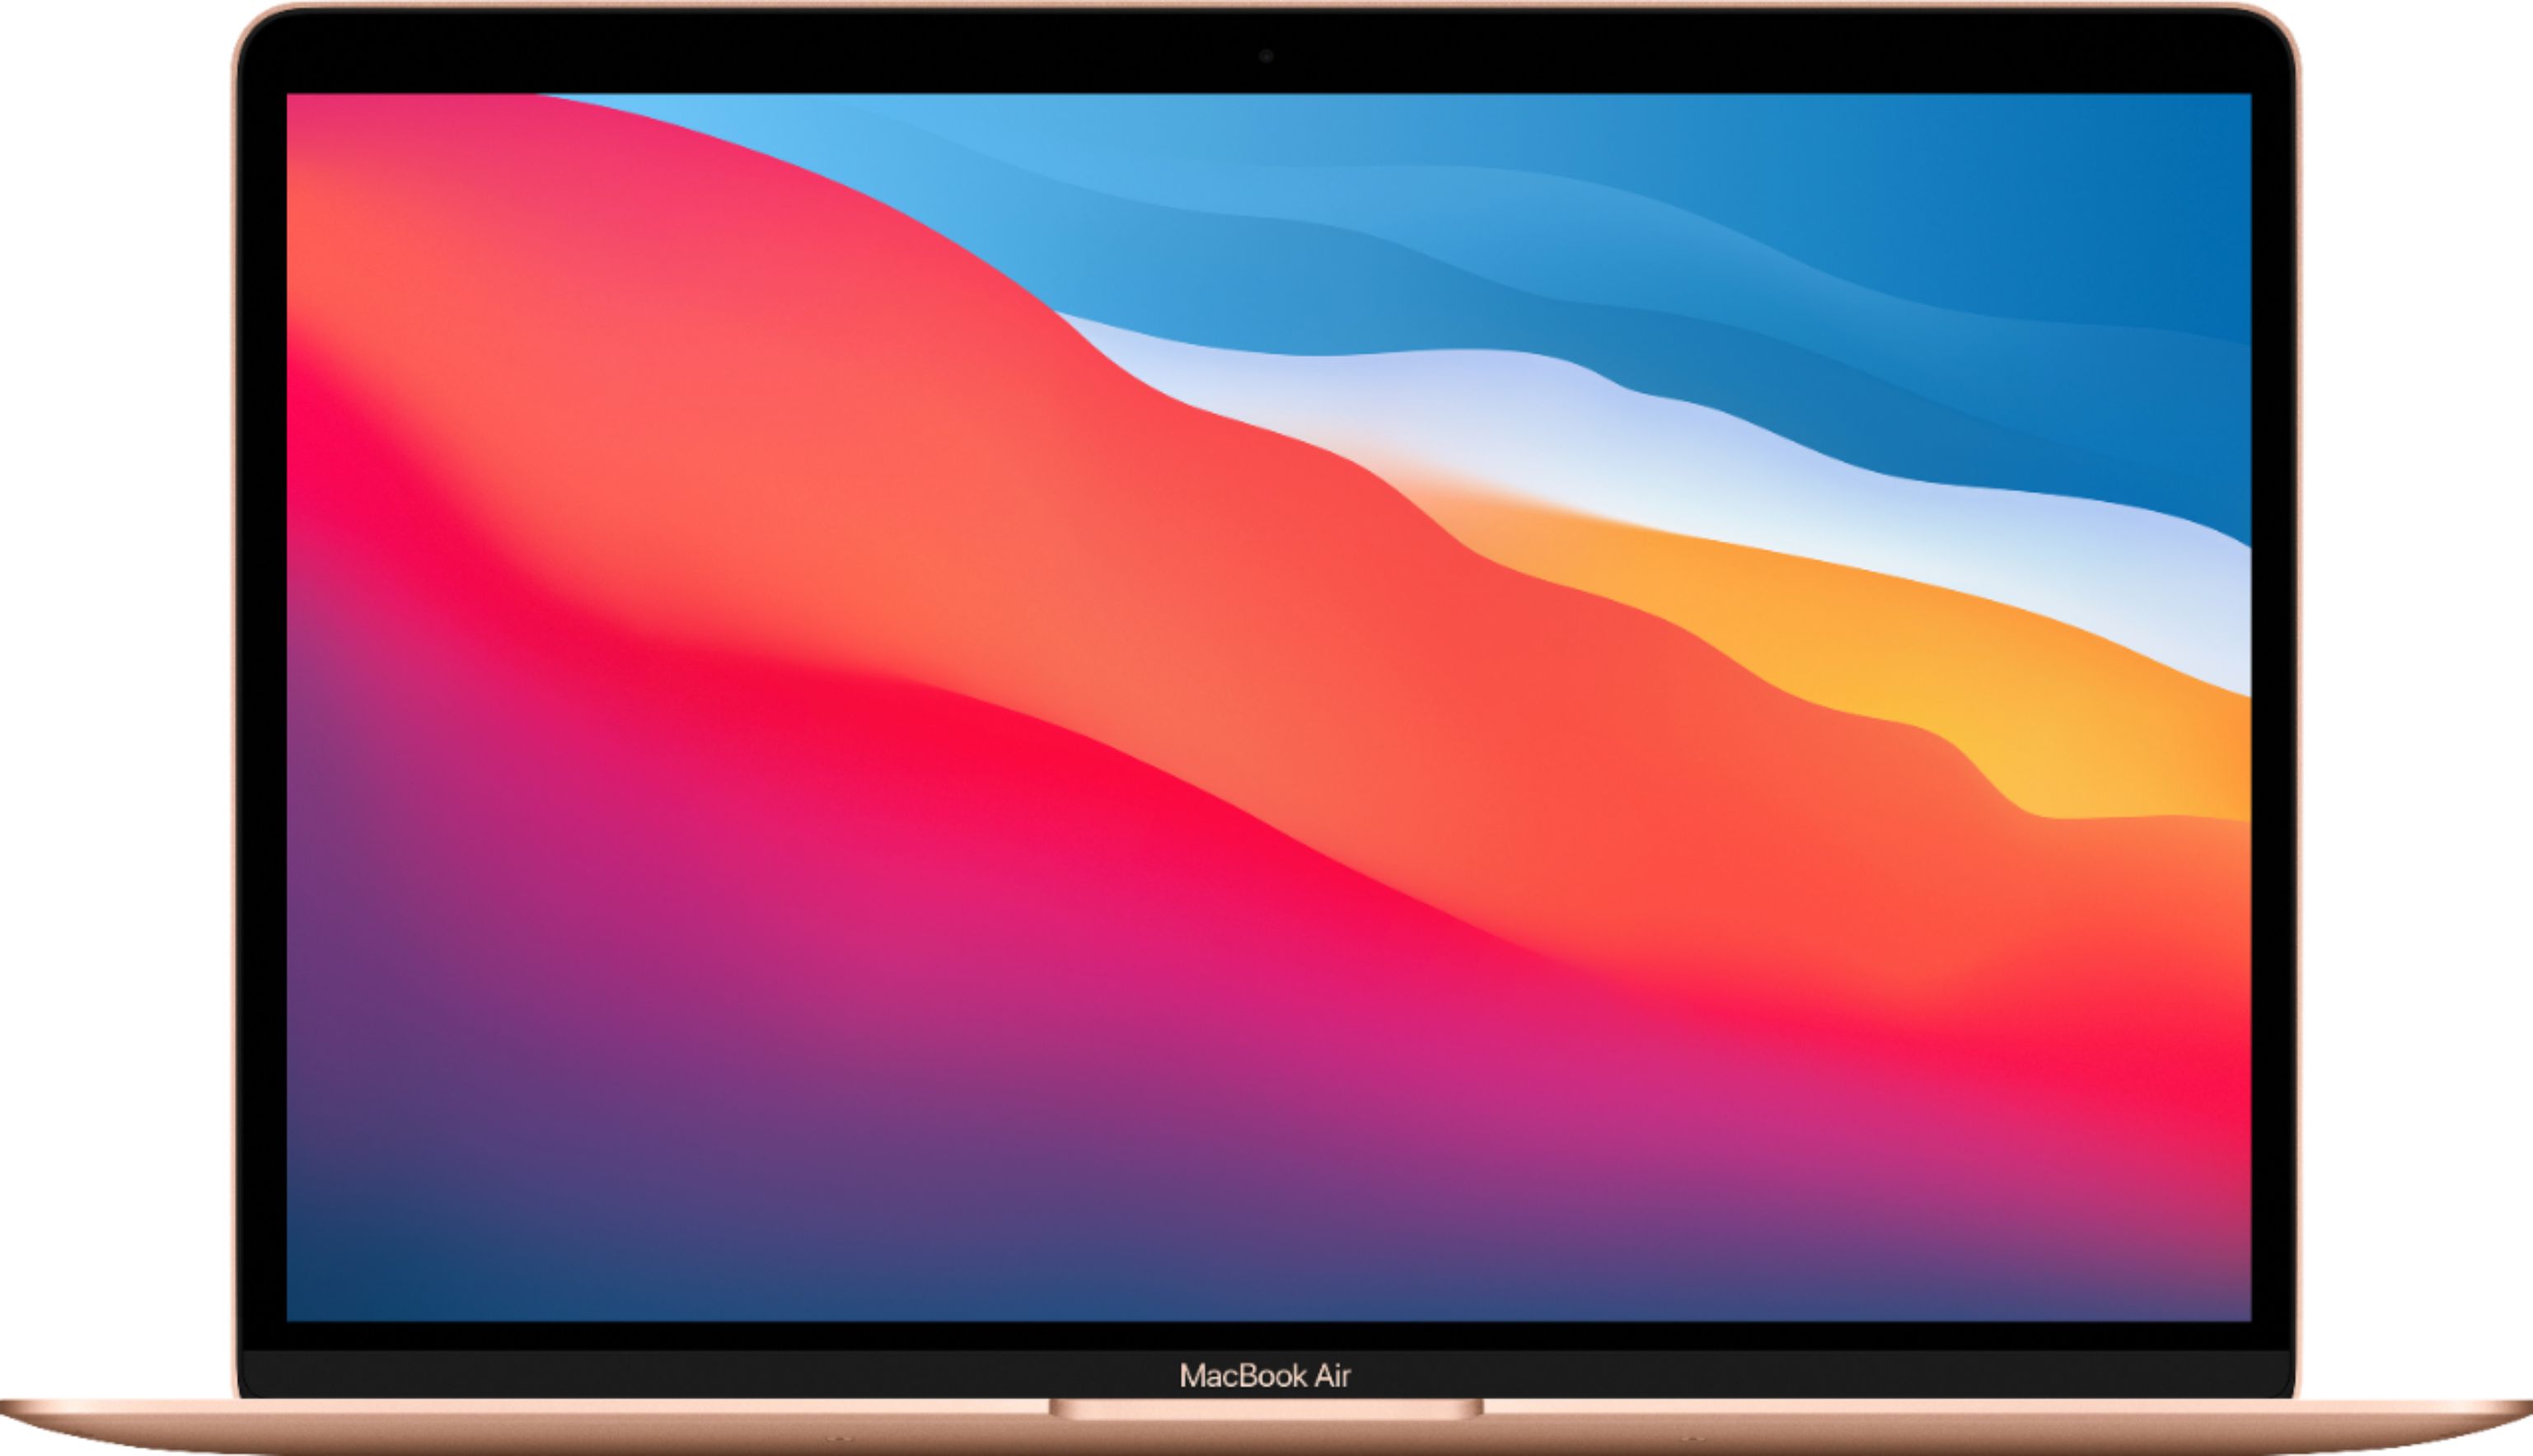 Geek Squad Certified Refurbished MacBook Air 13.3″ Laptop – Apple M1 chip – 8GB Memory – 256GB SSD – Gold